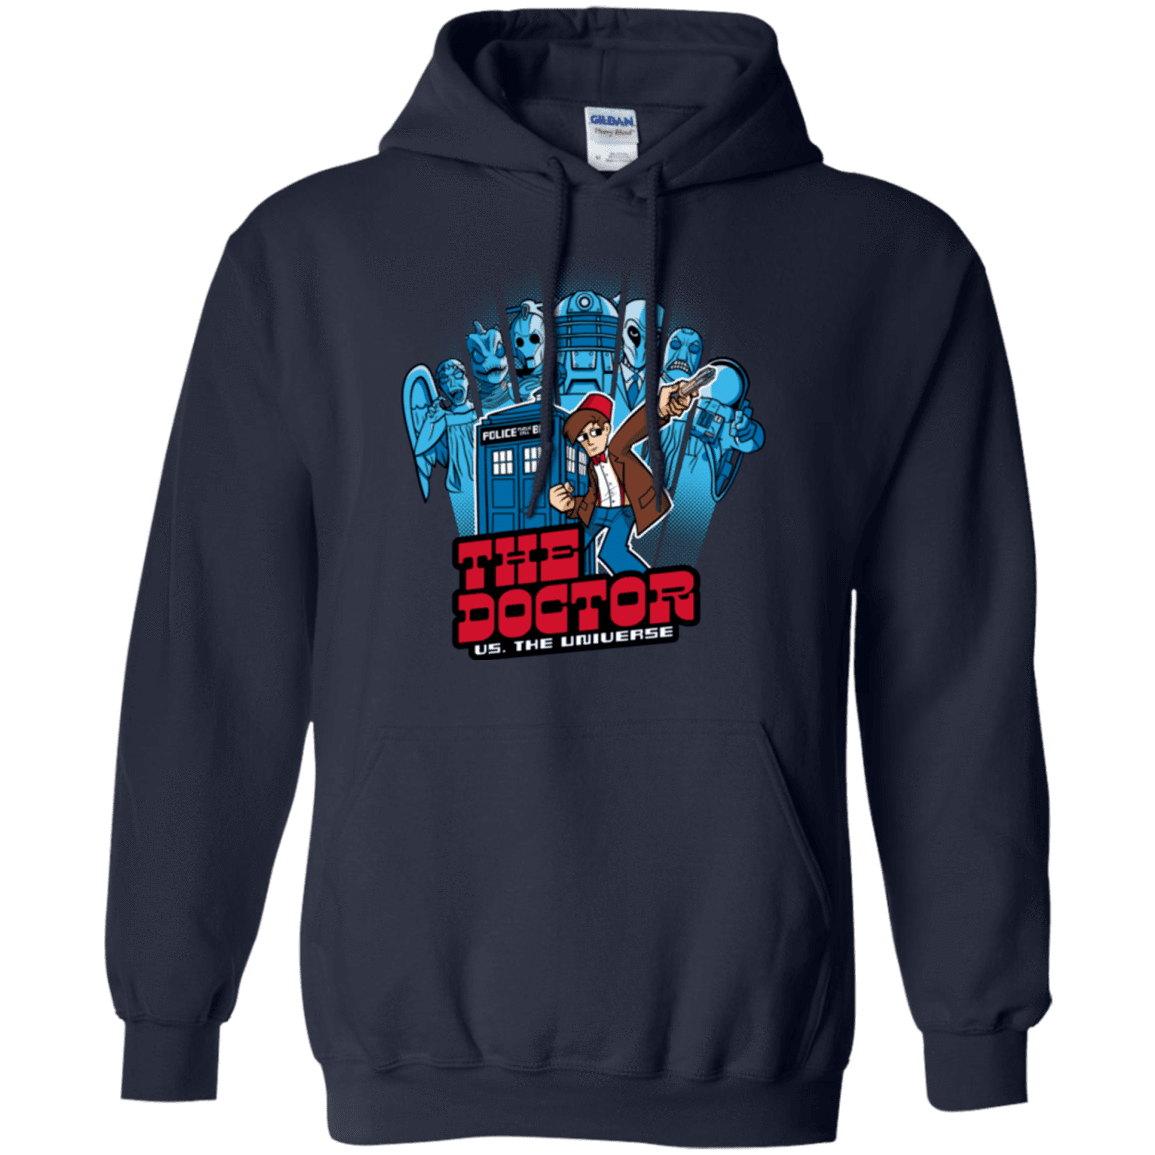 Sweatshirts Navy / Small 11 vs universe Pullover Hoodie